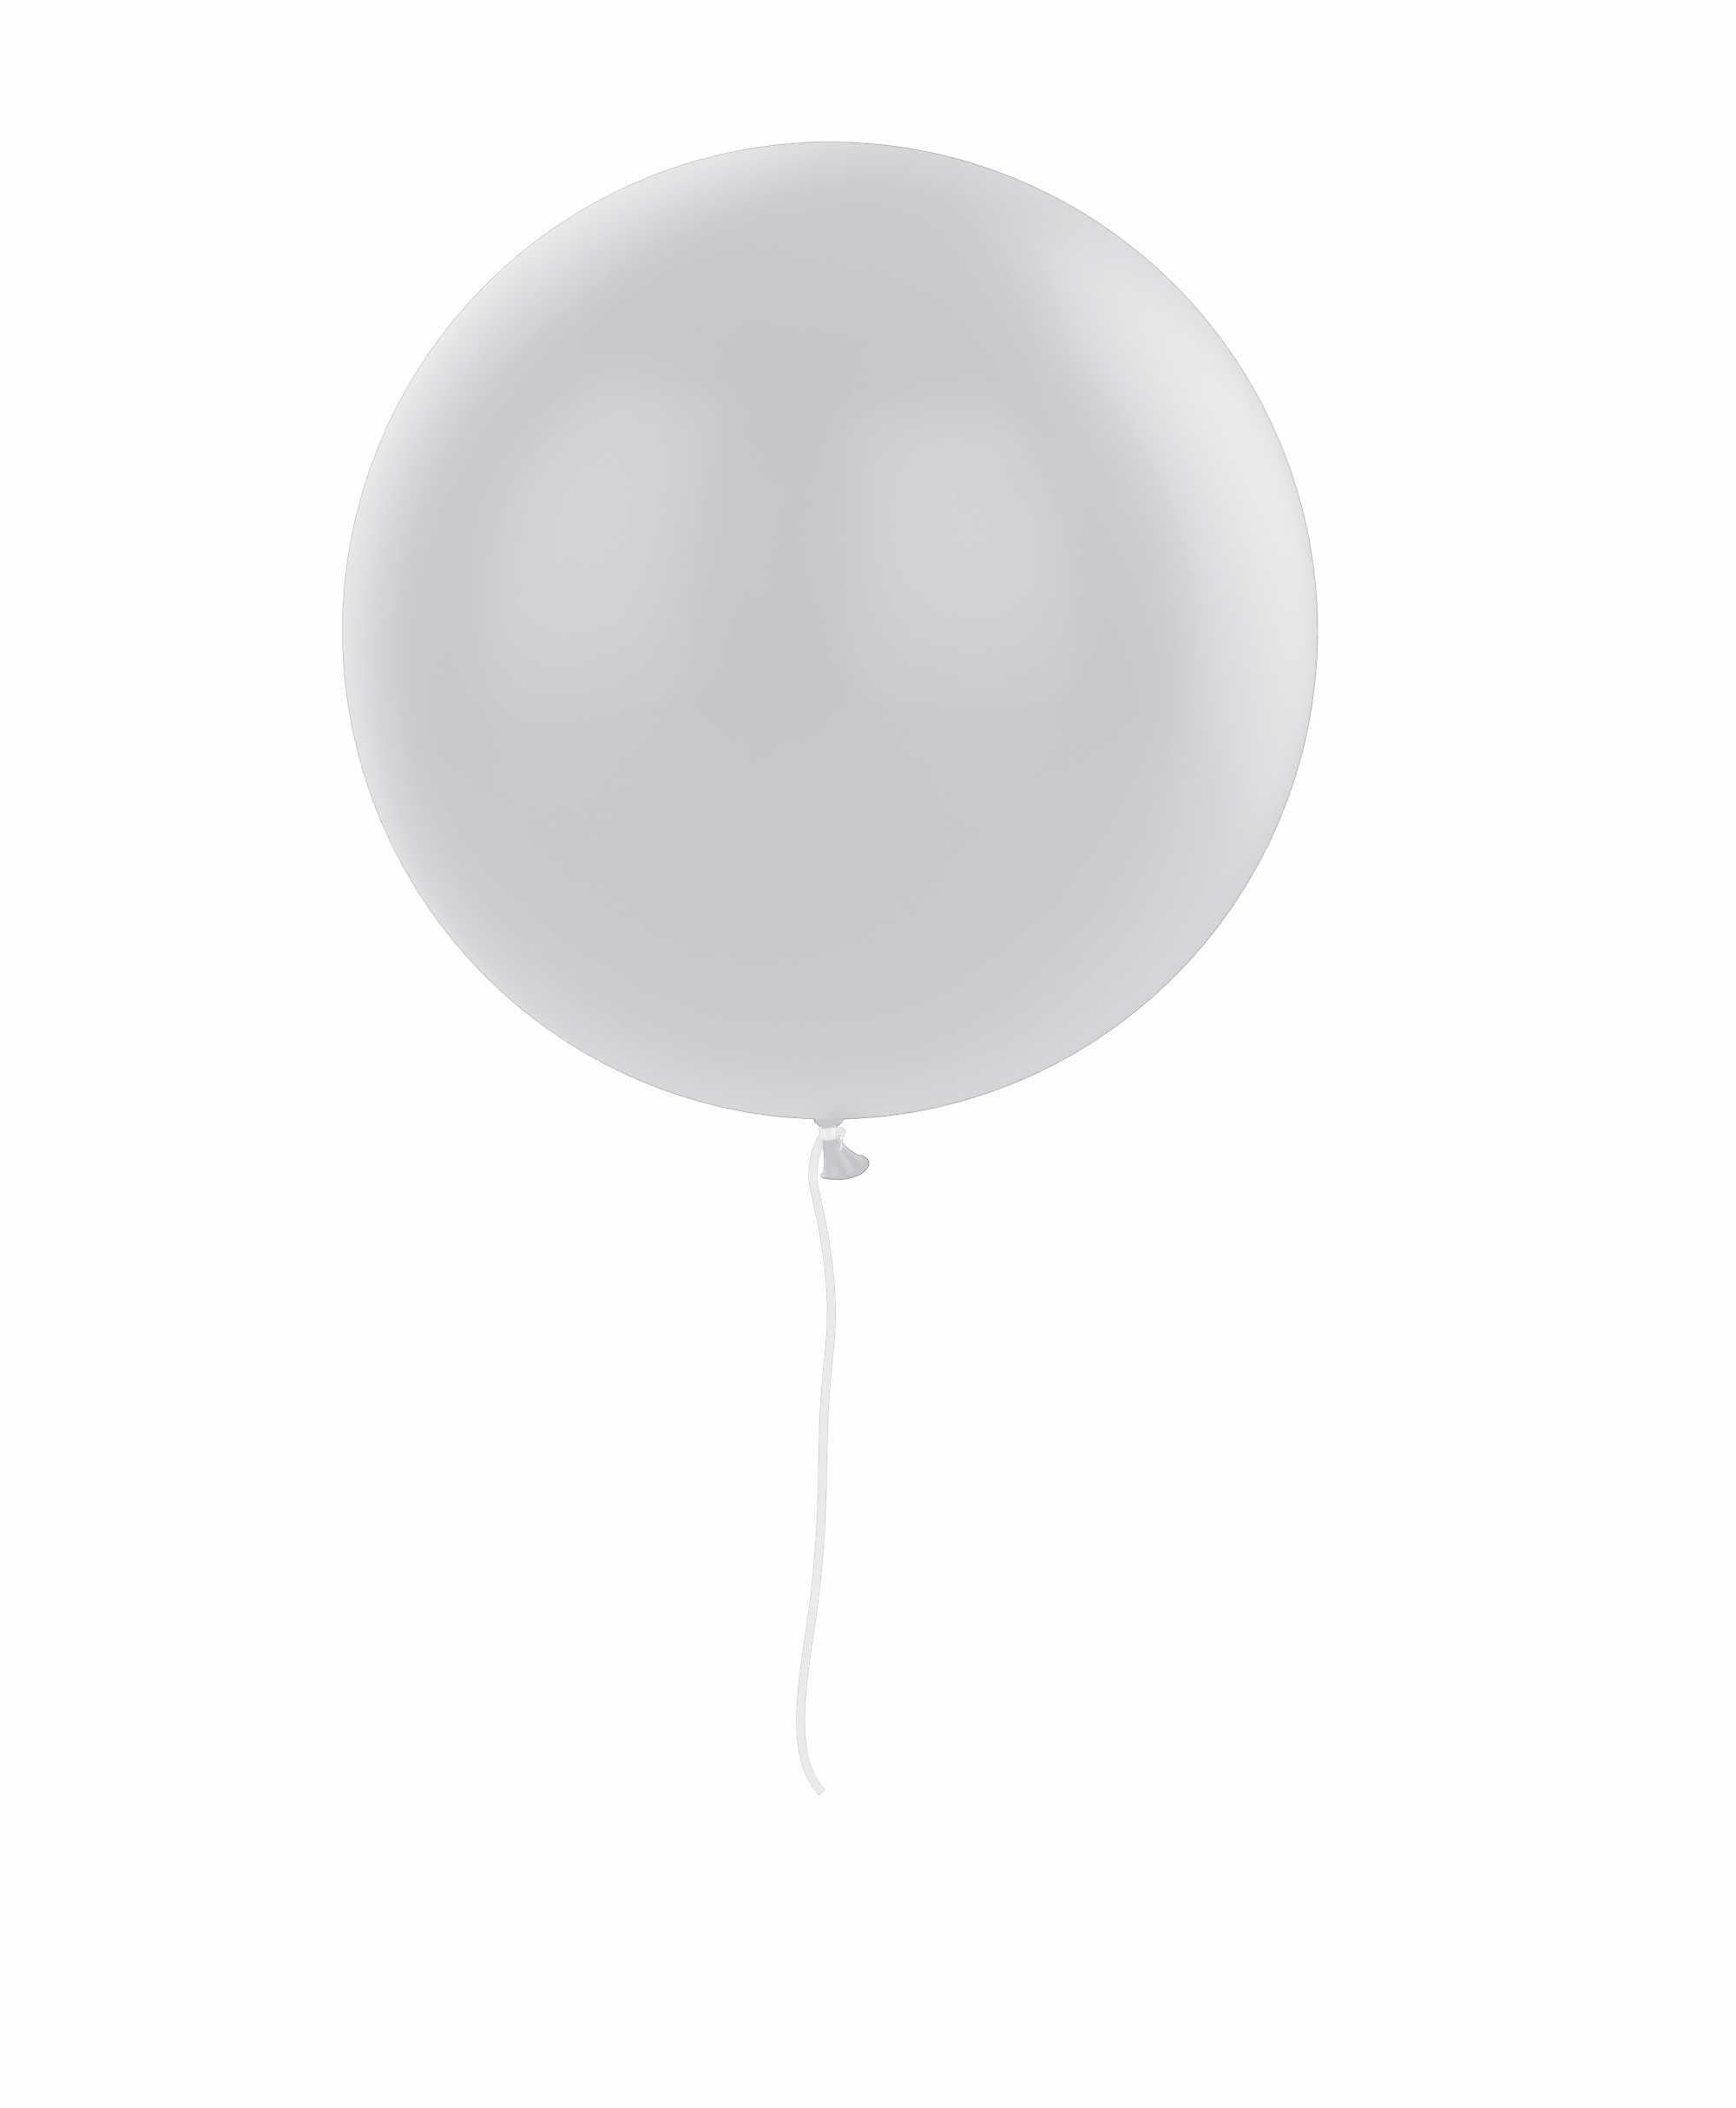 Grey balloon 36" - Gum nut theme